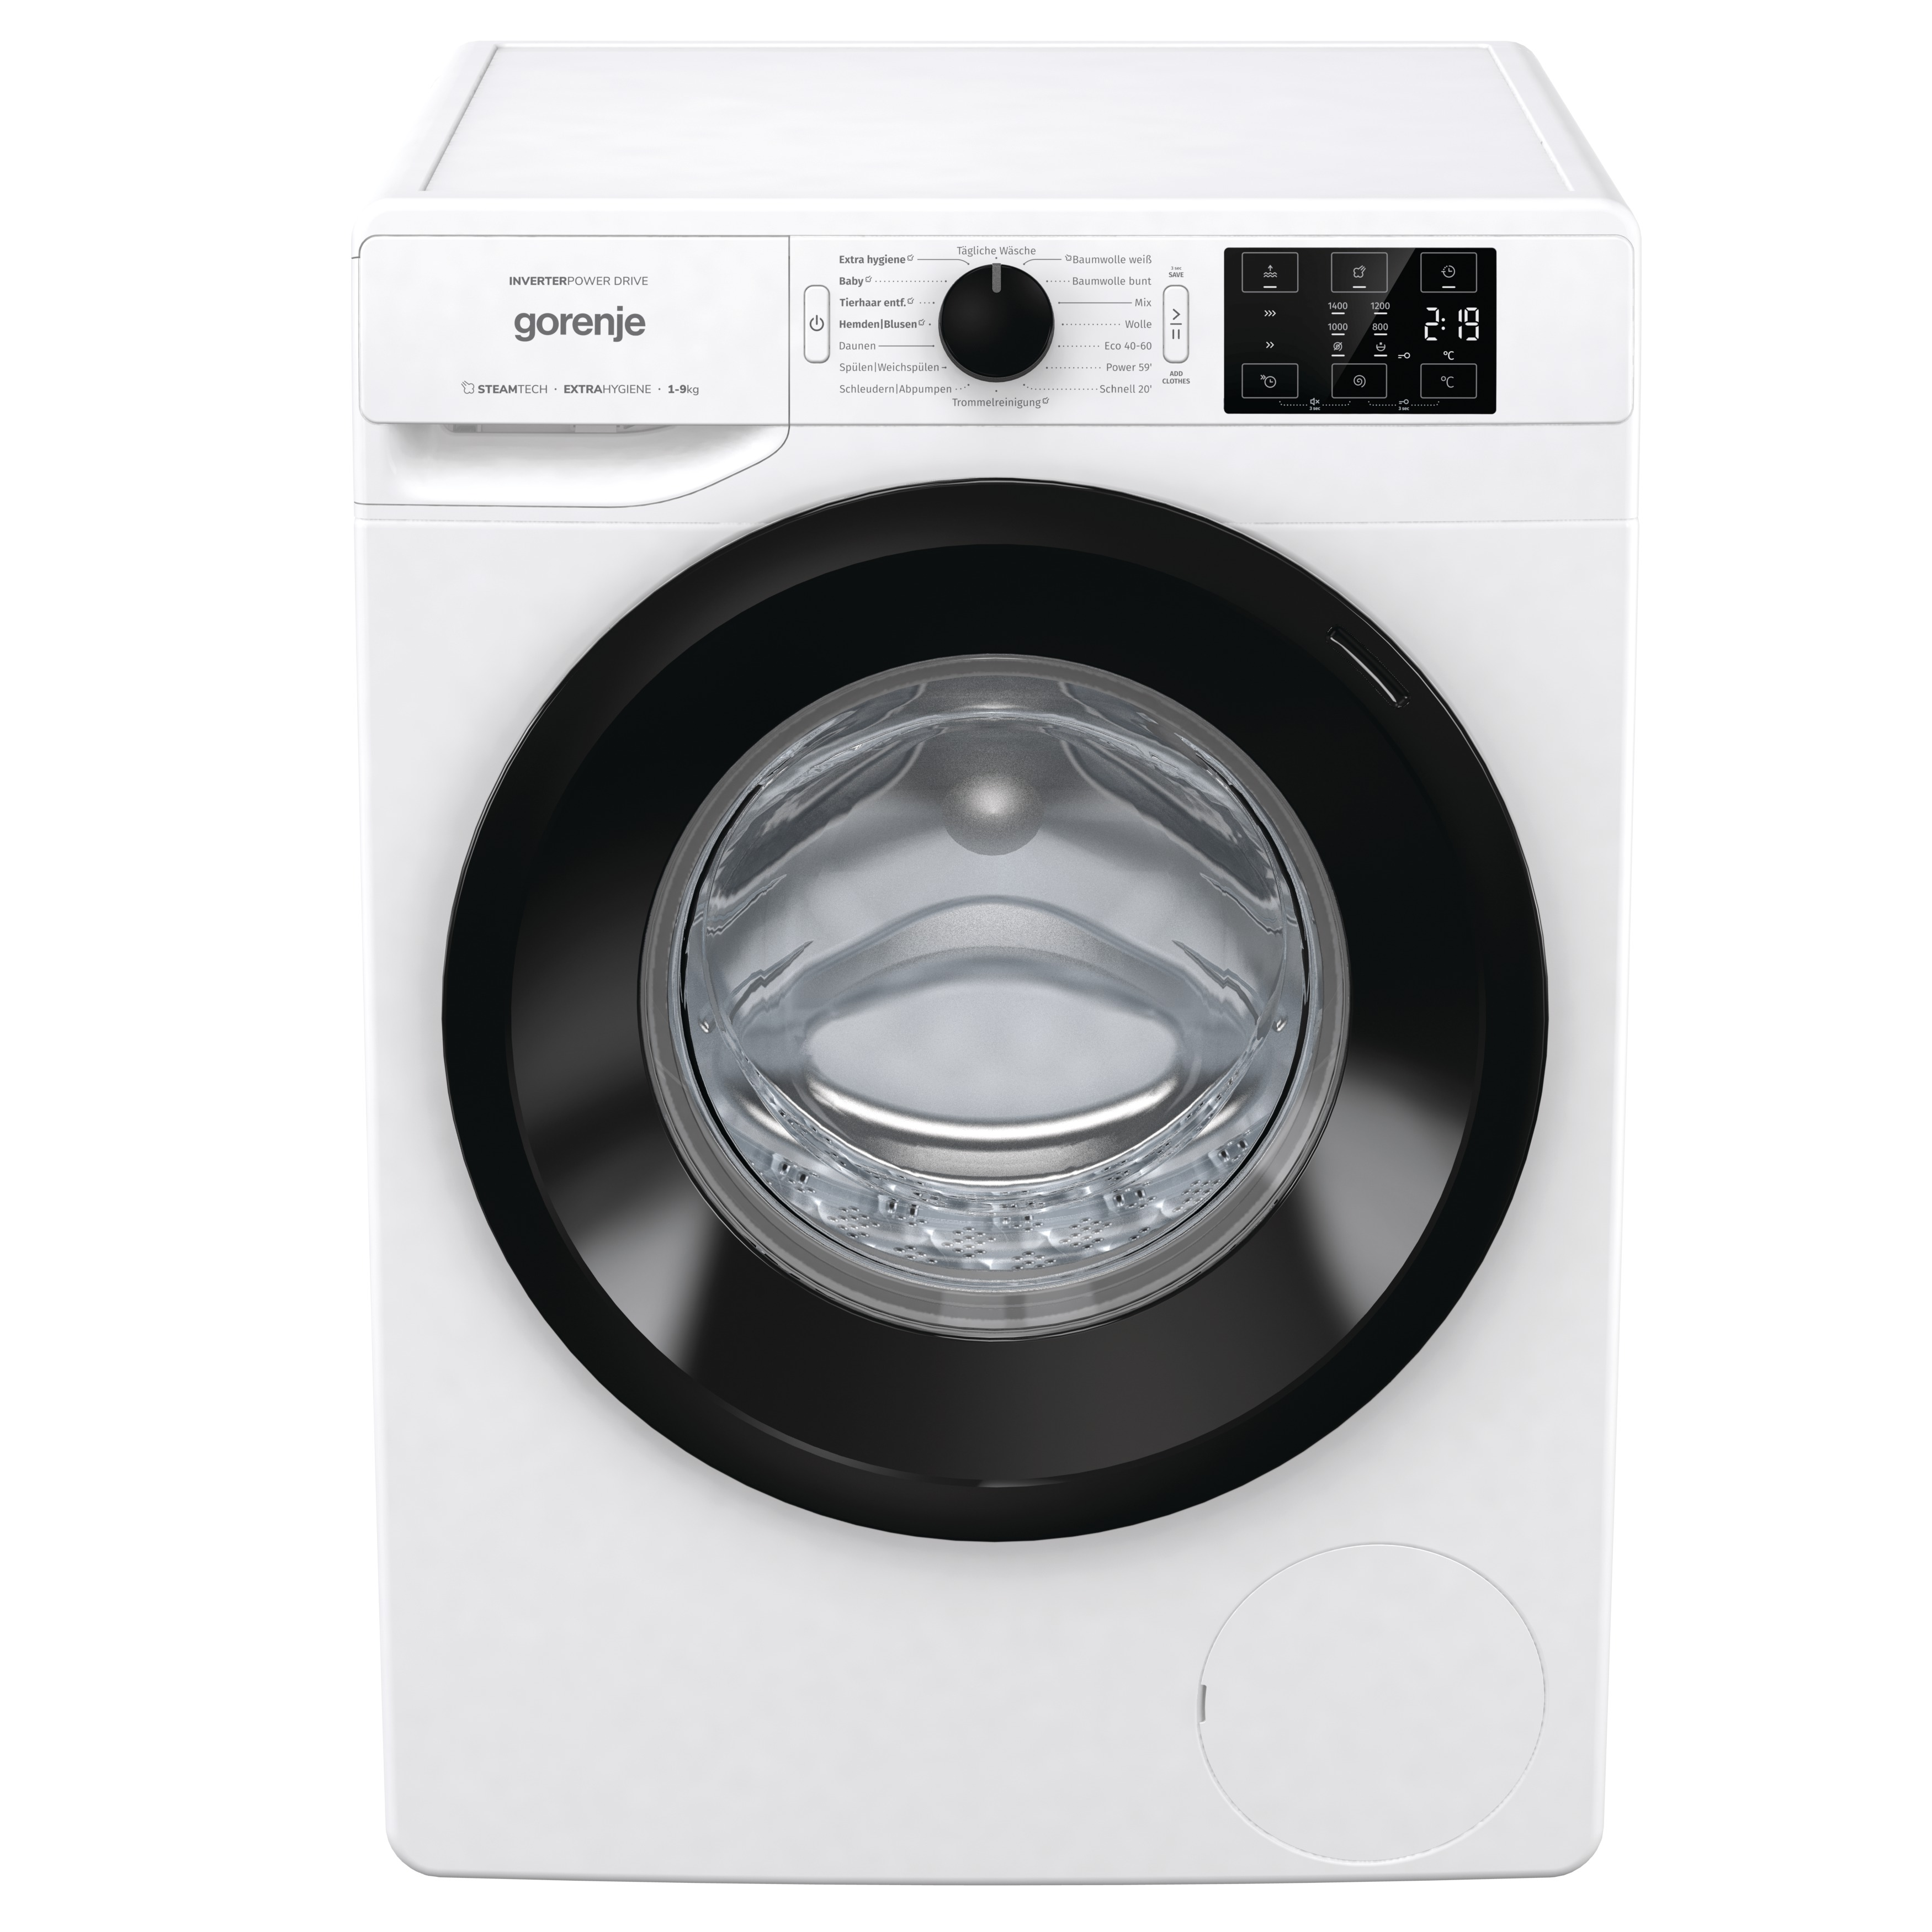 WNEI94APS (9 GORENJE kg, Waschmaschine U/Min., A) 1400